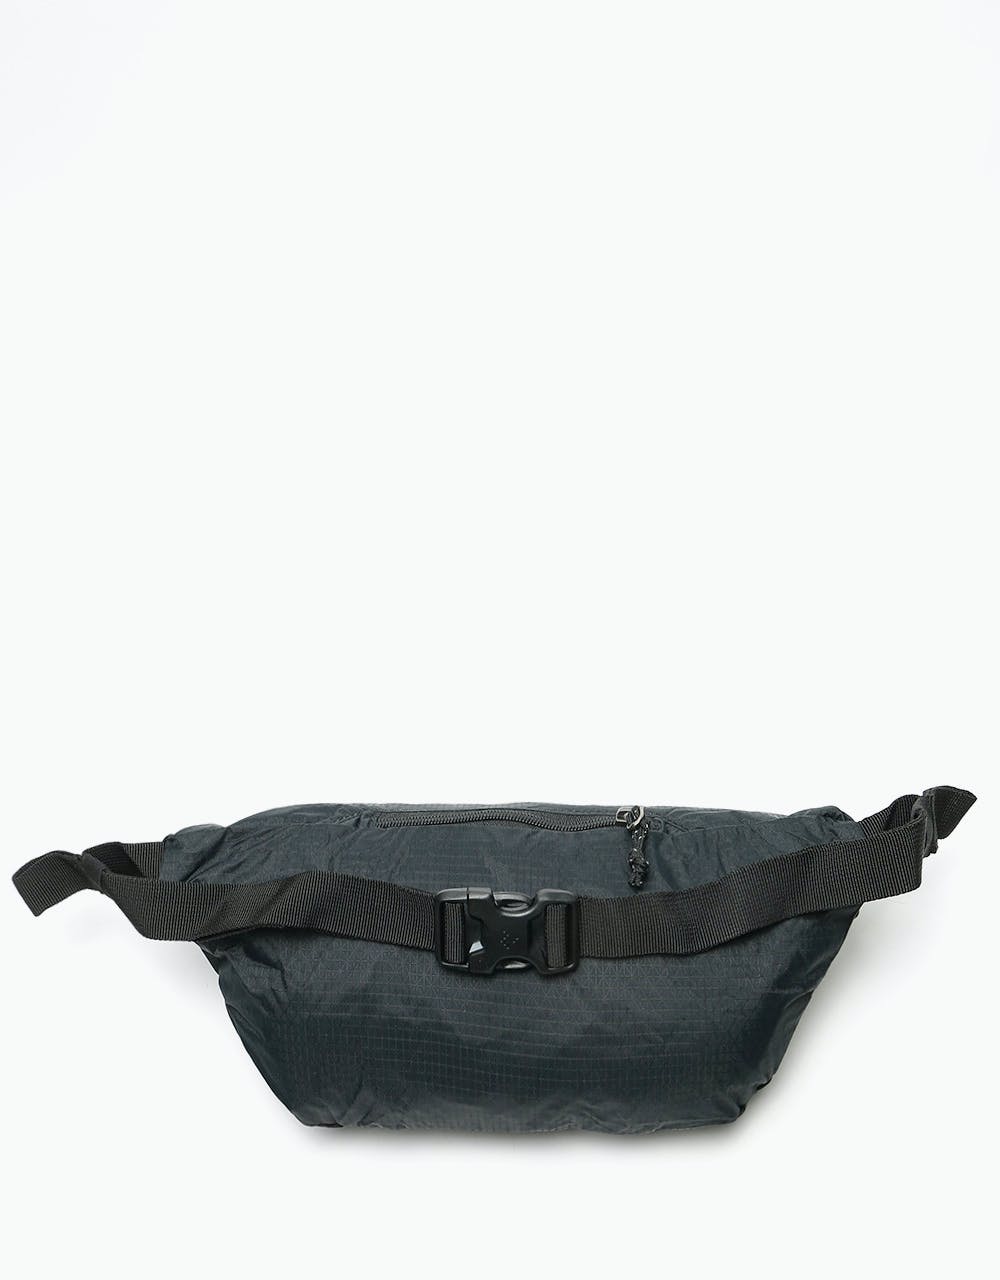 Columbia Lightweight Packable Cross Body Bag - Black